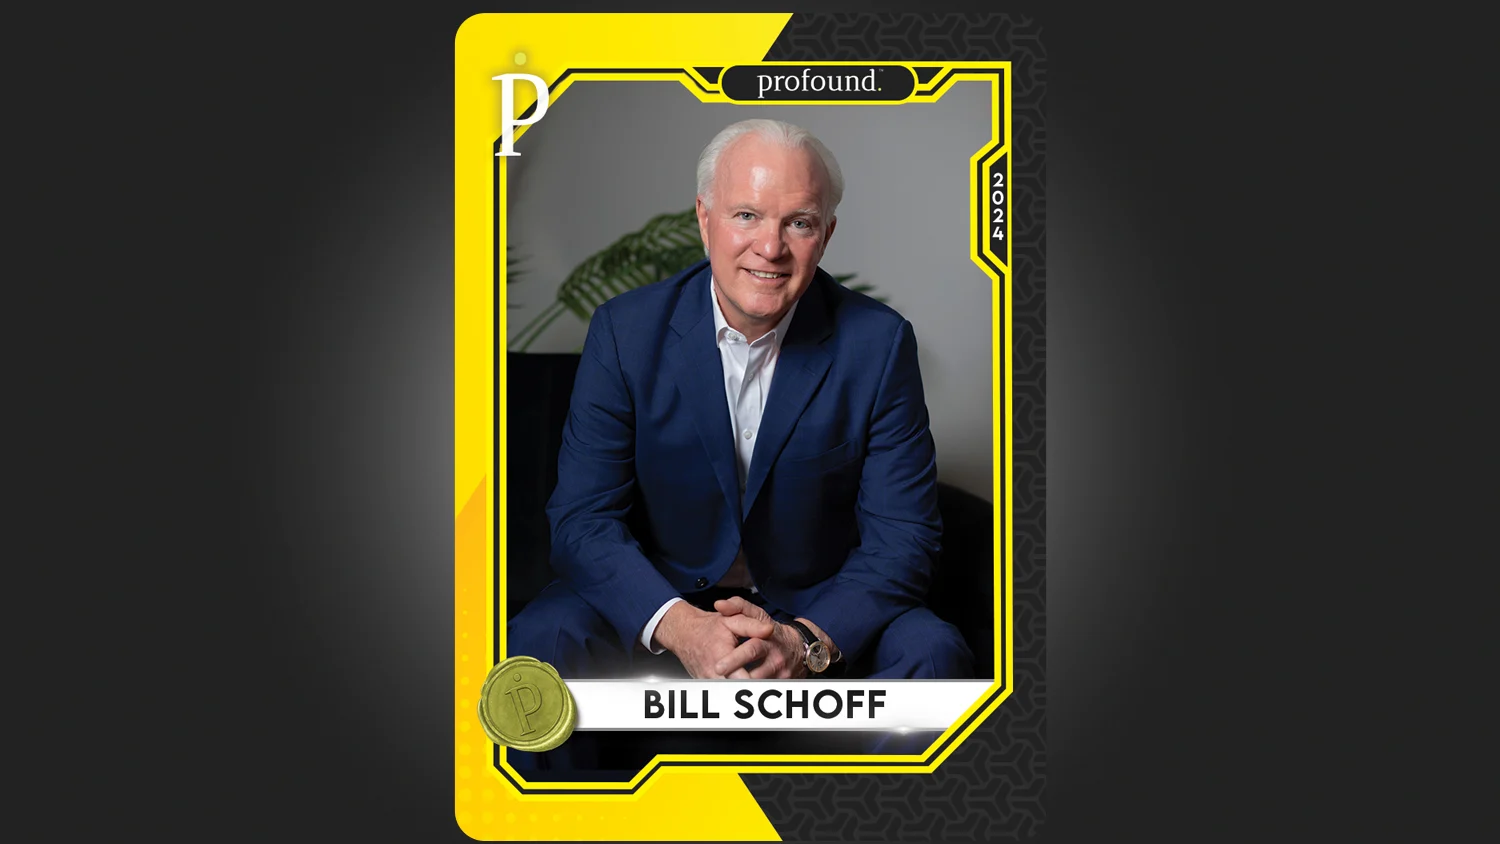 Bill Schoff